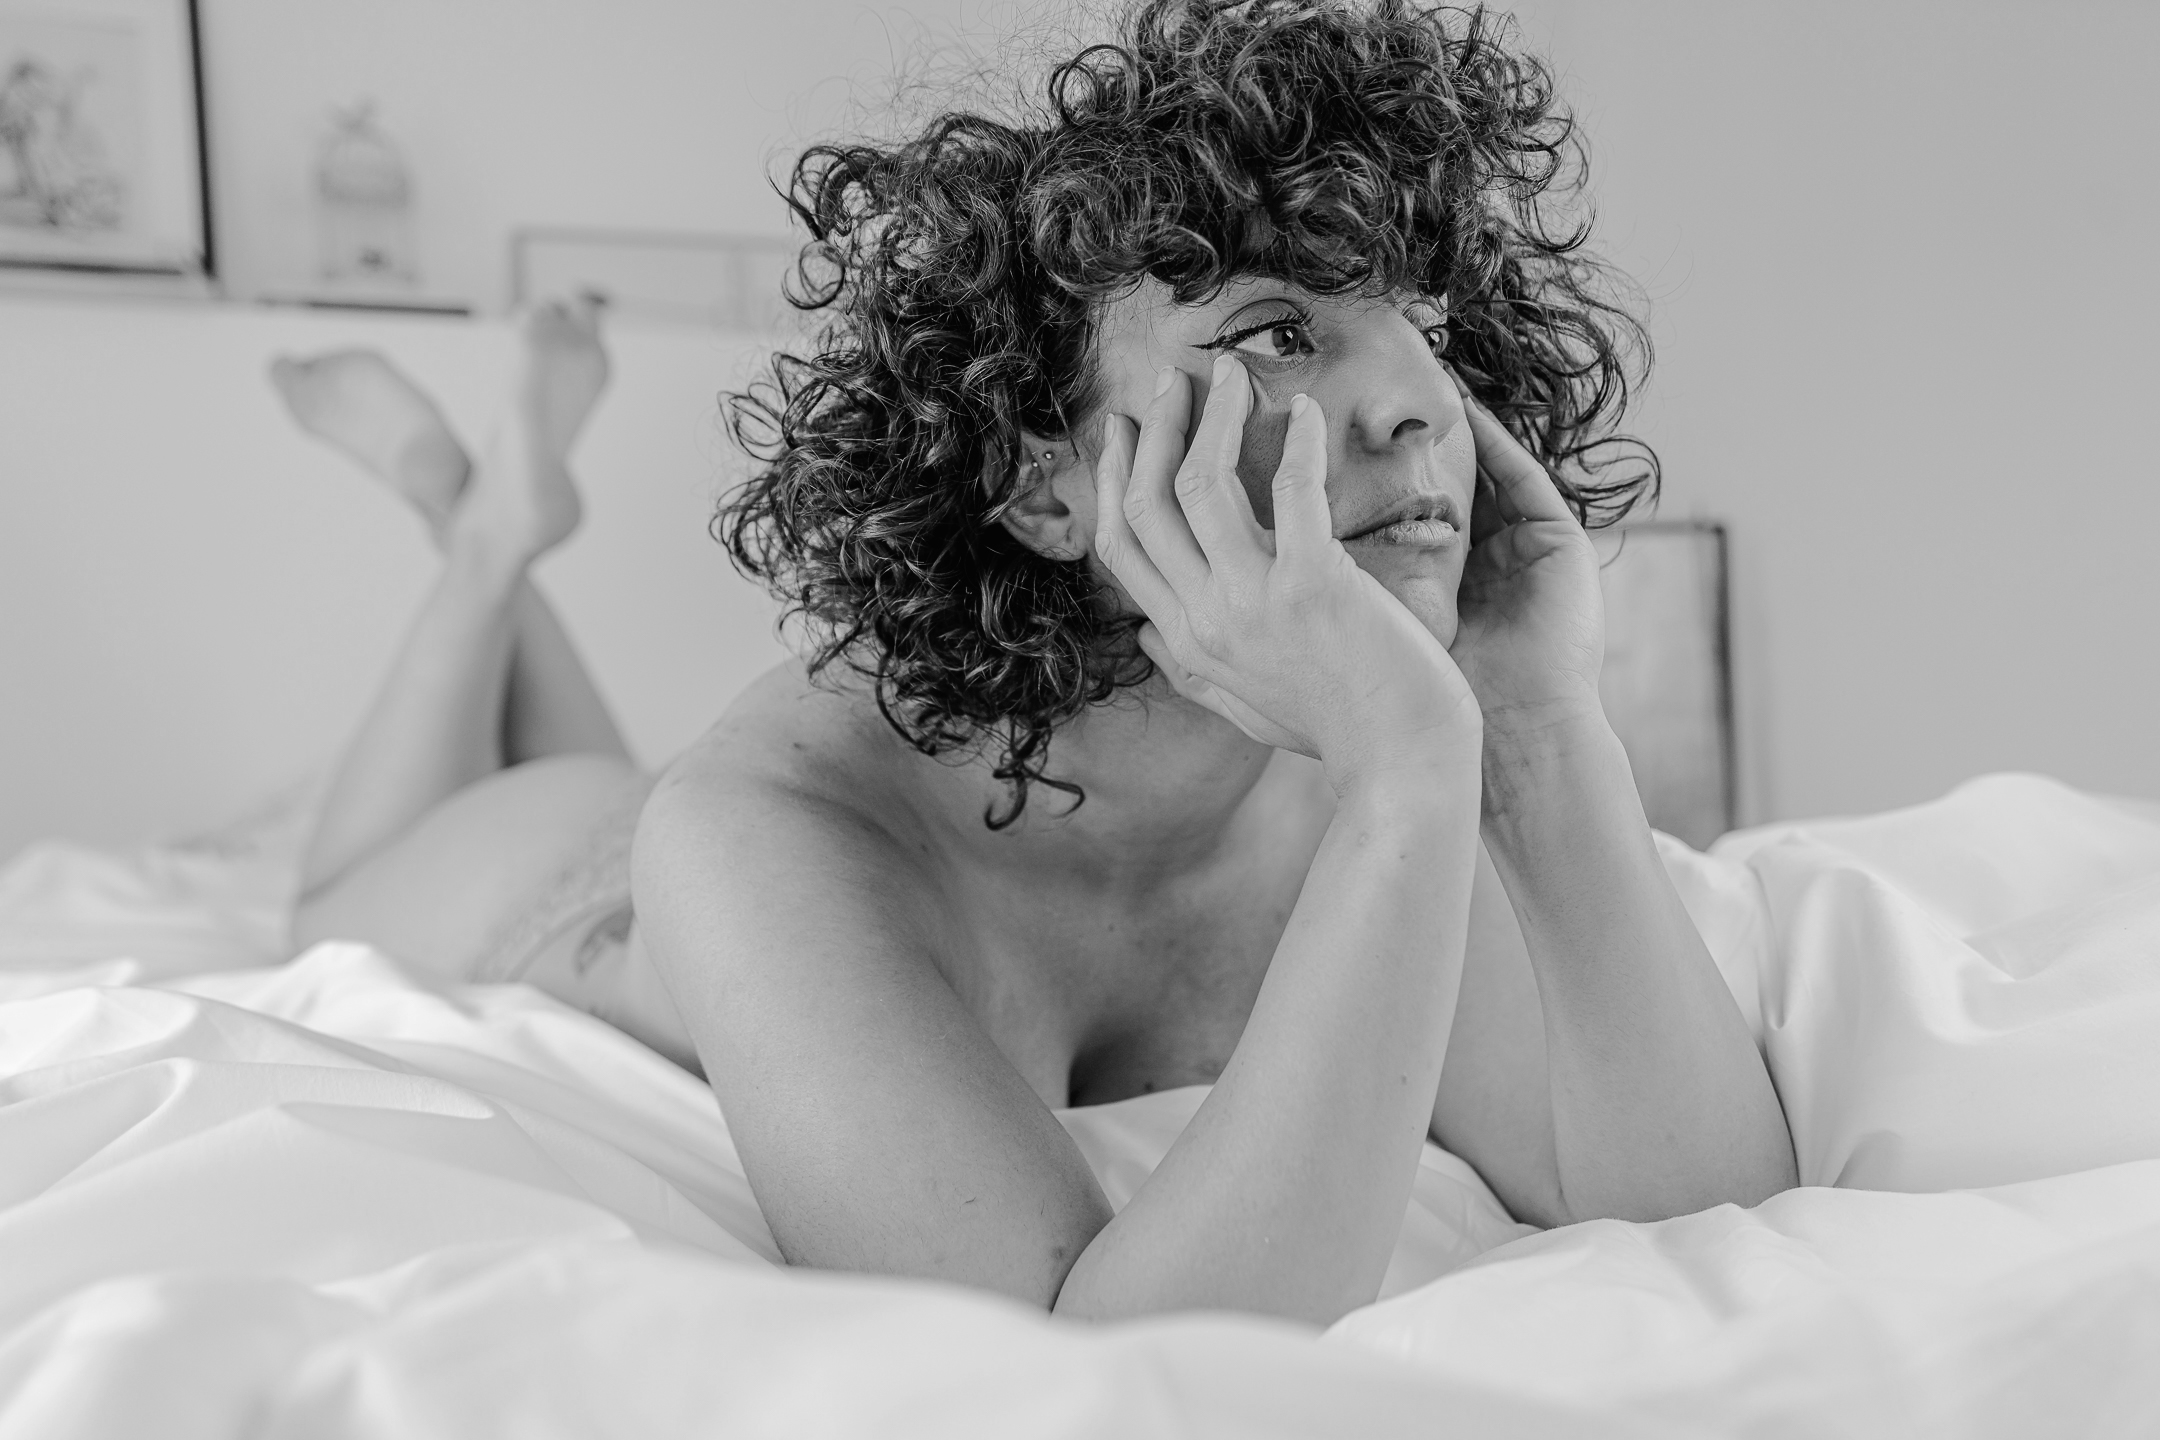 Hotel erotica bedroom fantasies adult msn emotes - Real Naked Girls